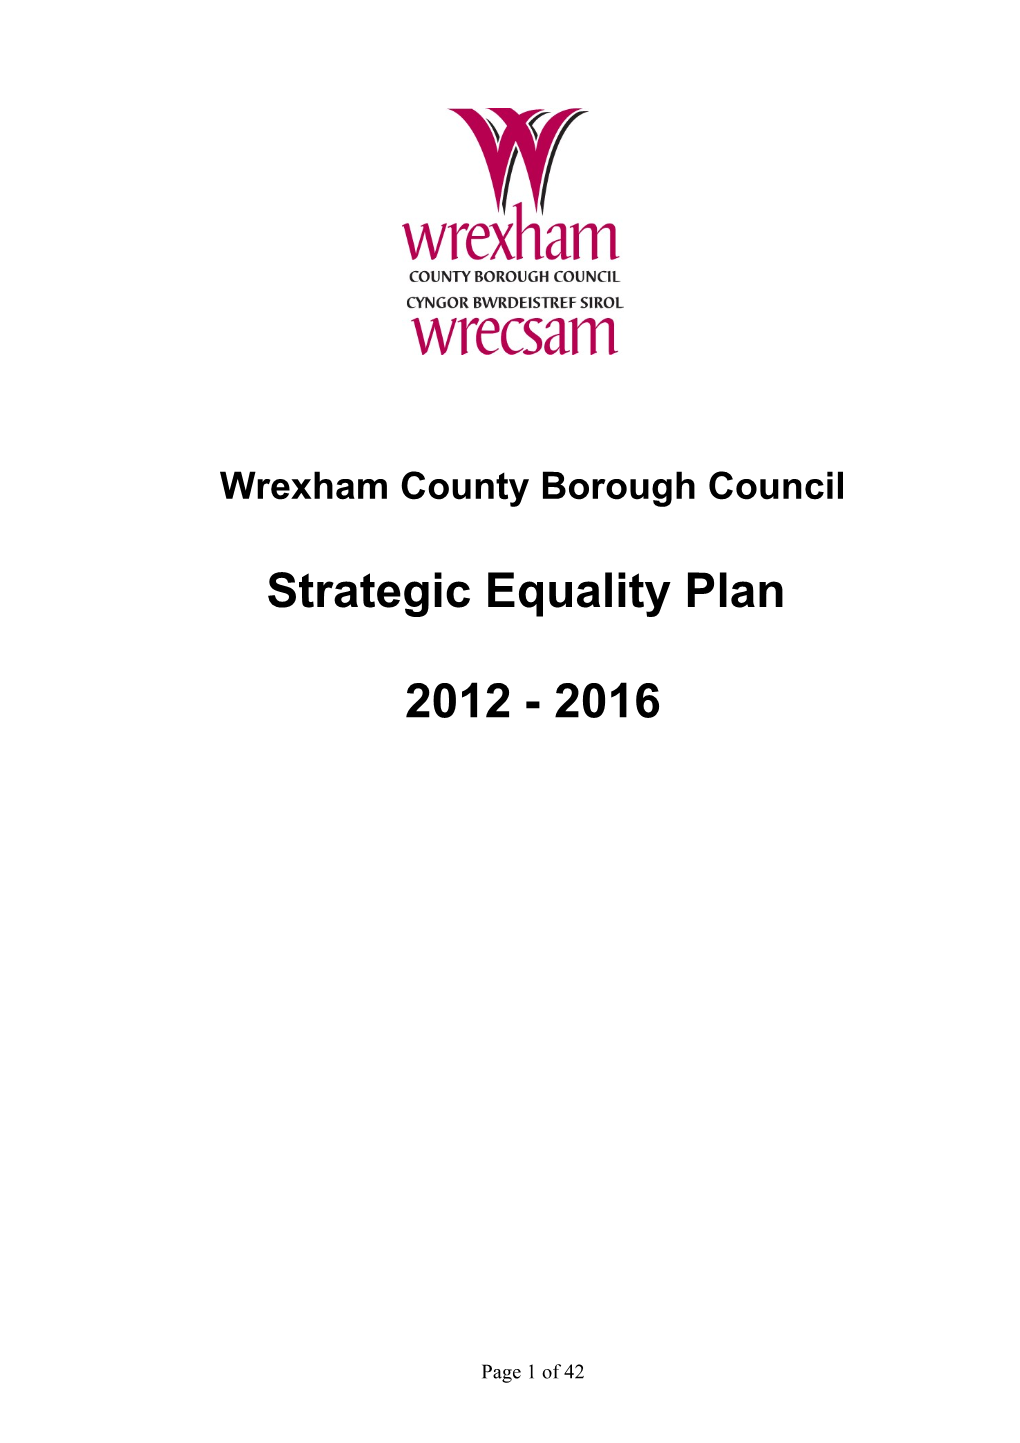 Strategic Equality Plan 2012 - 2016